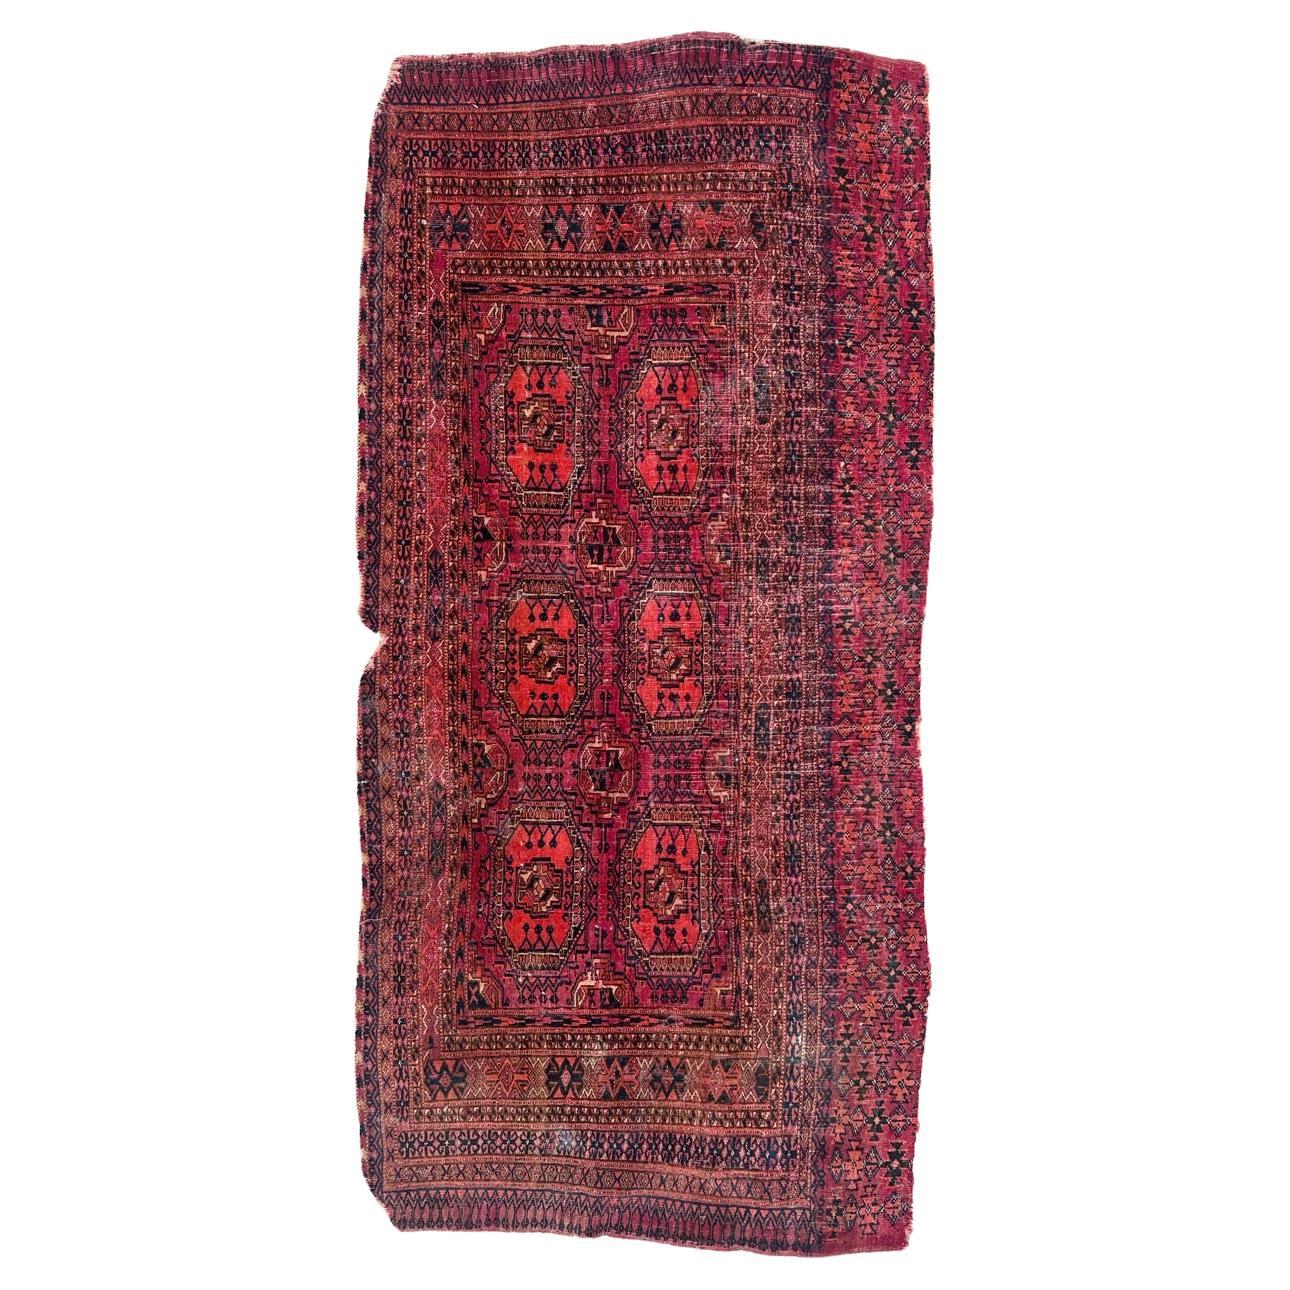  Antique Turkmen Yomut Chuval Horse Cover Rug